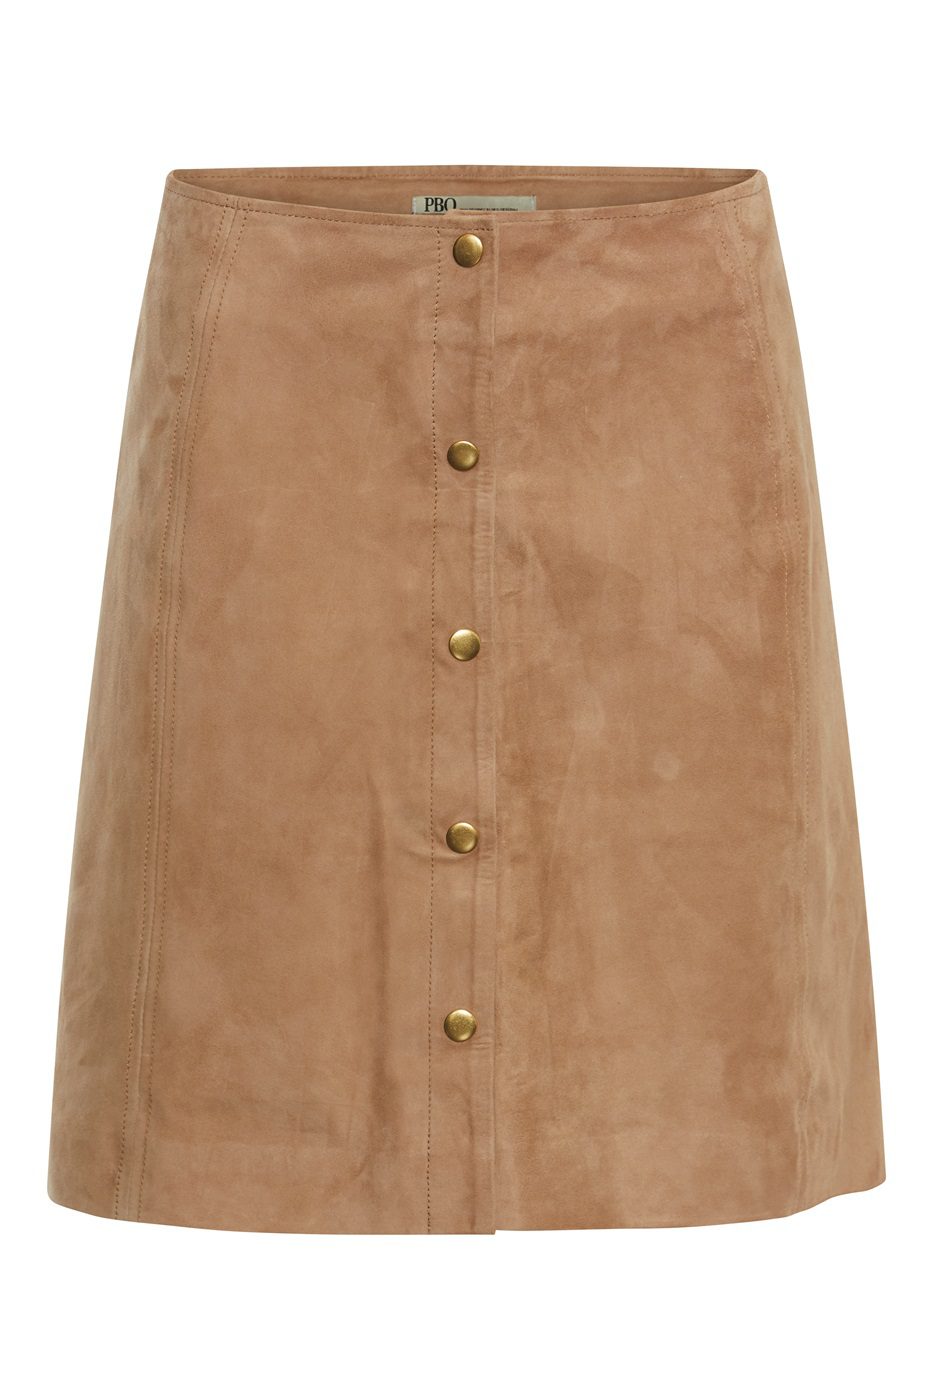 PBO Allona leather skirt 1